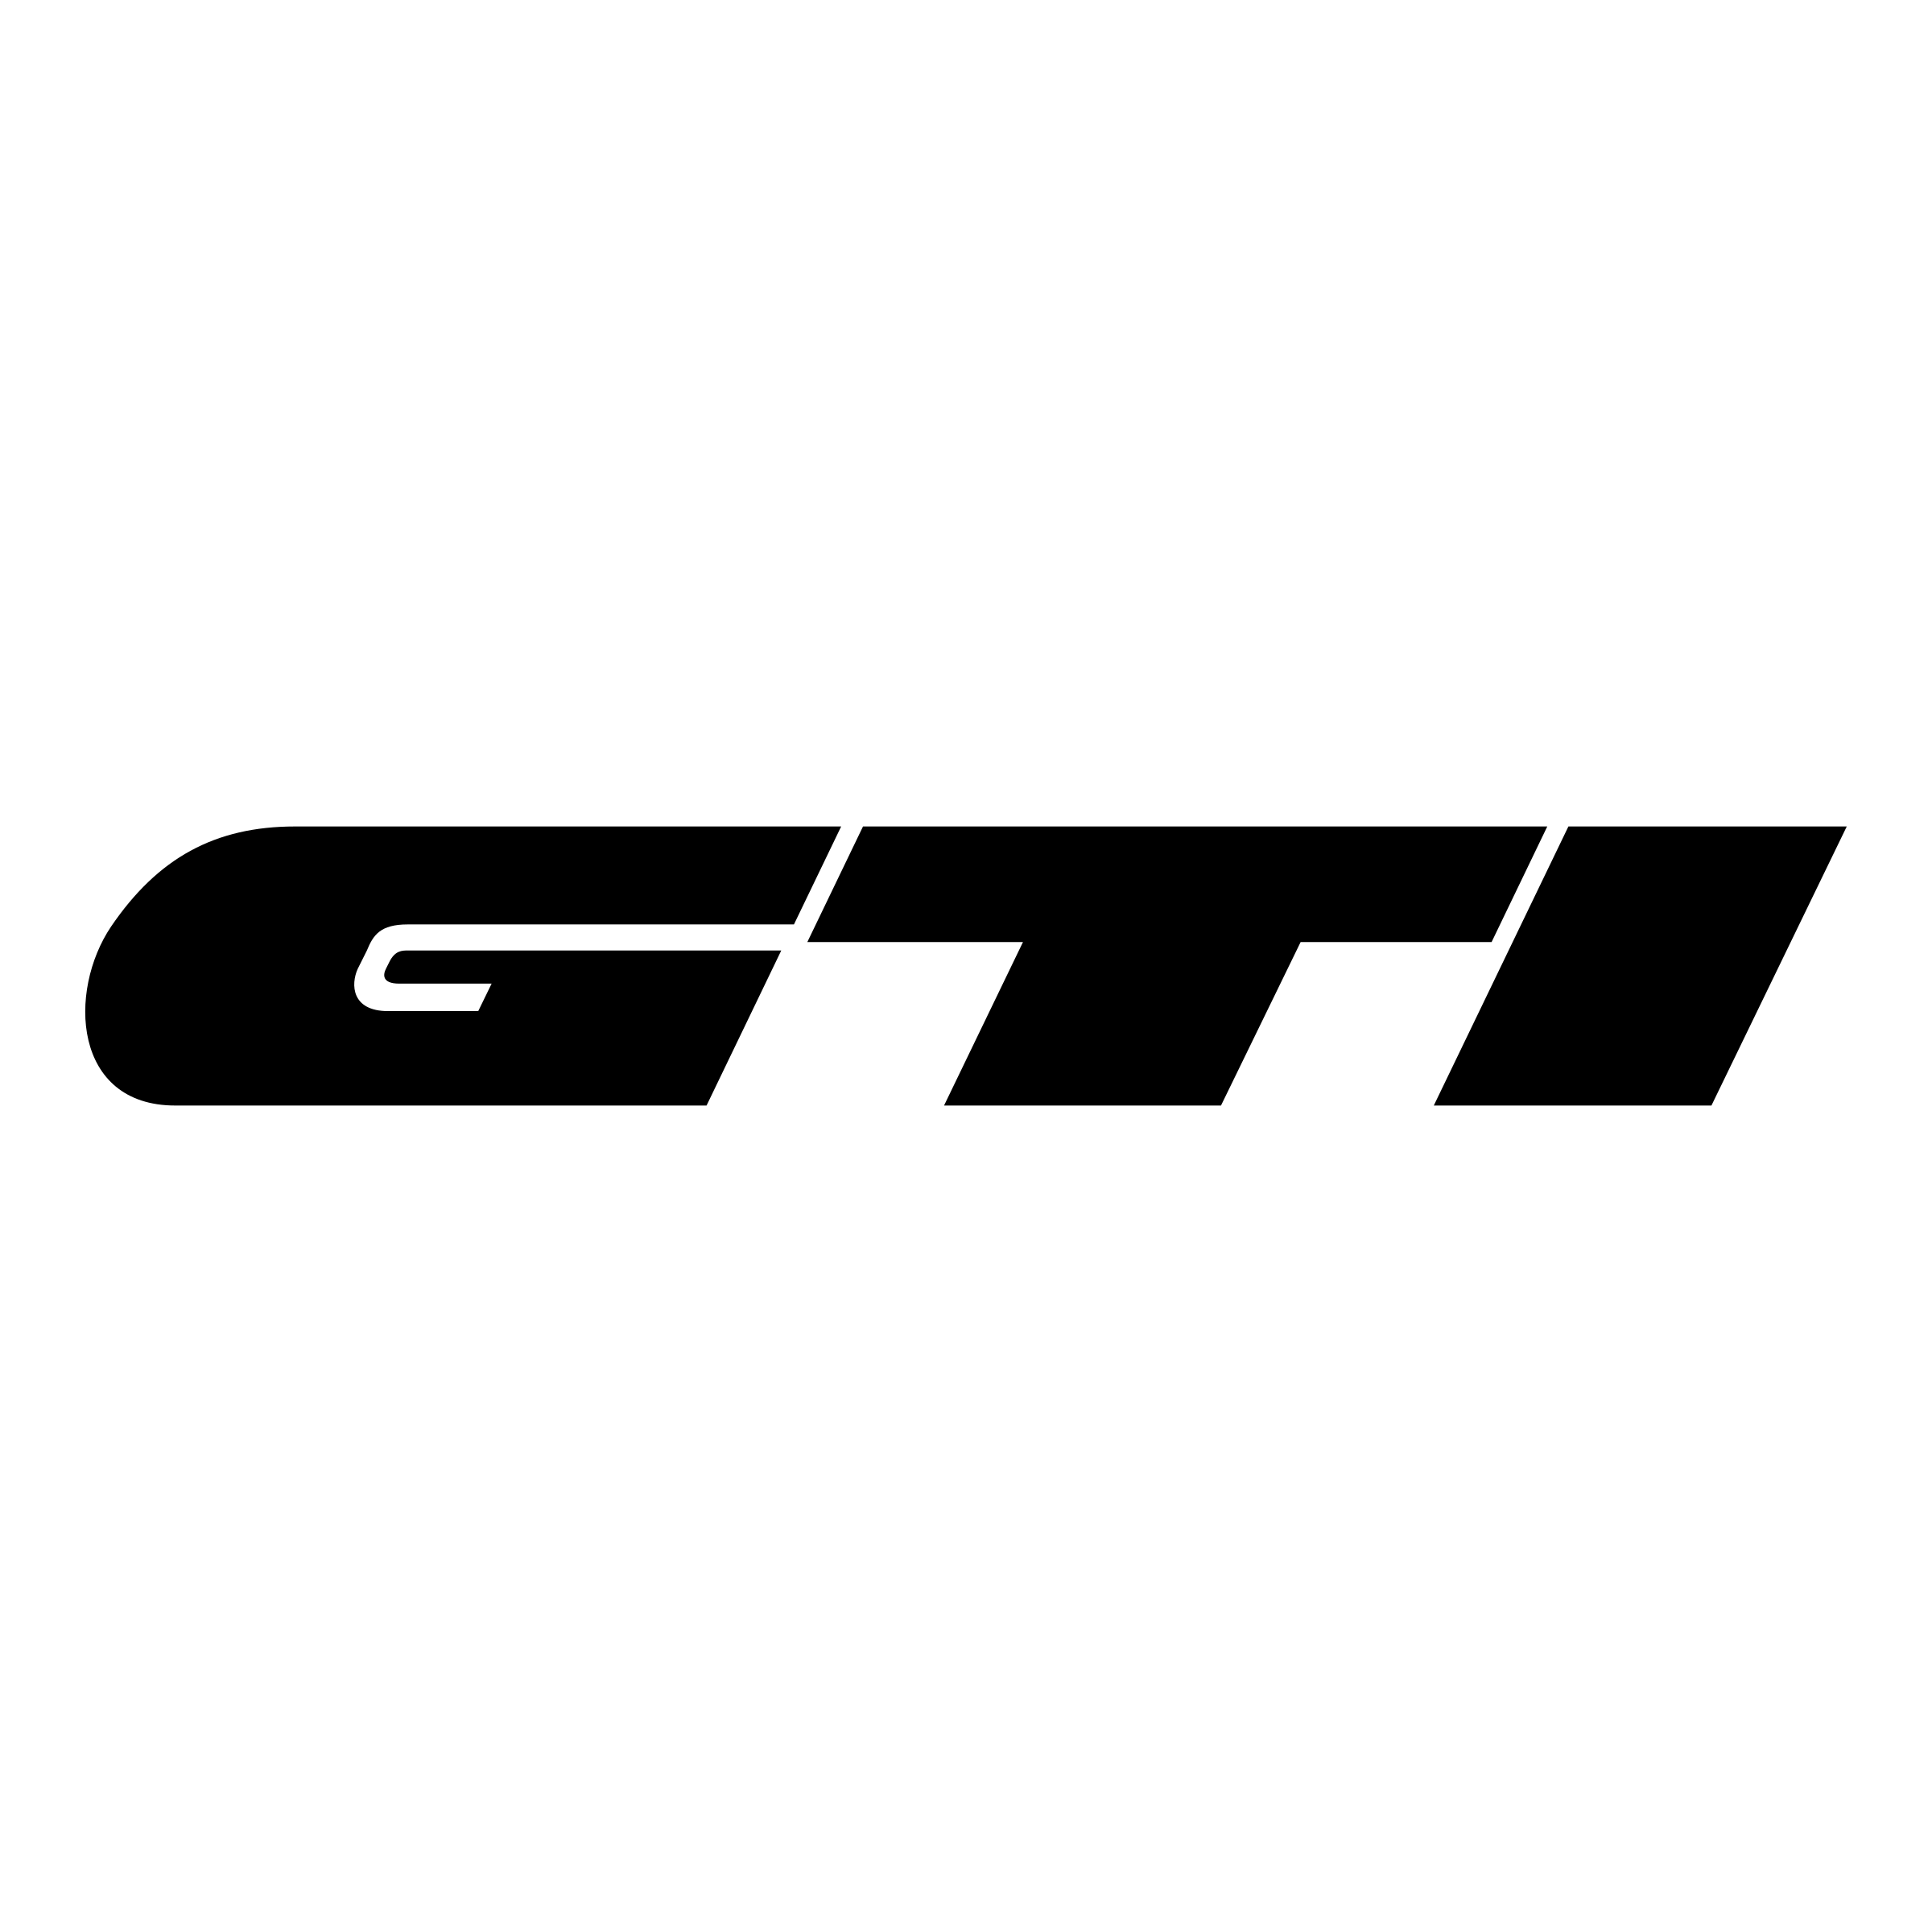 GTI Logo - GTI Logo PNG Transparent & SVG Vector - Freebie Supply